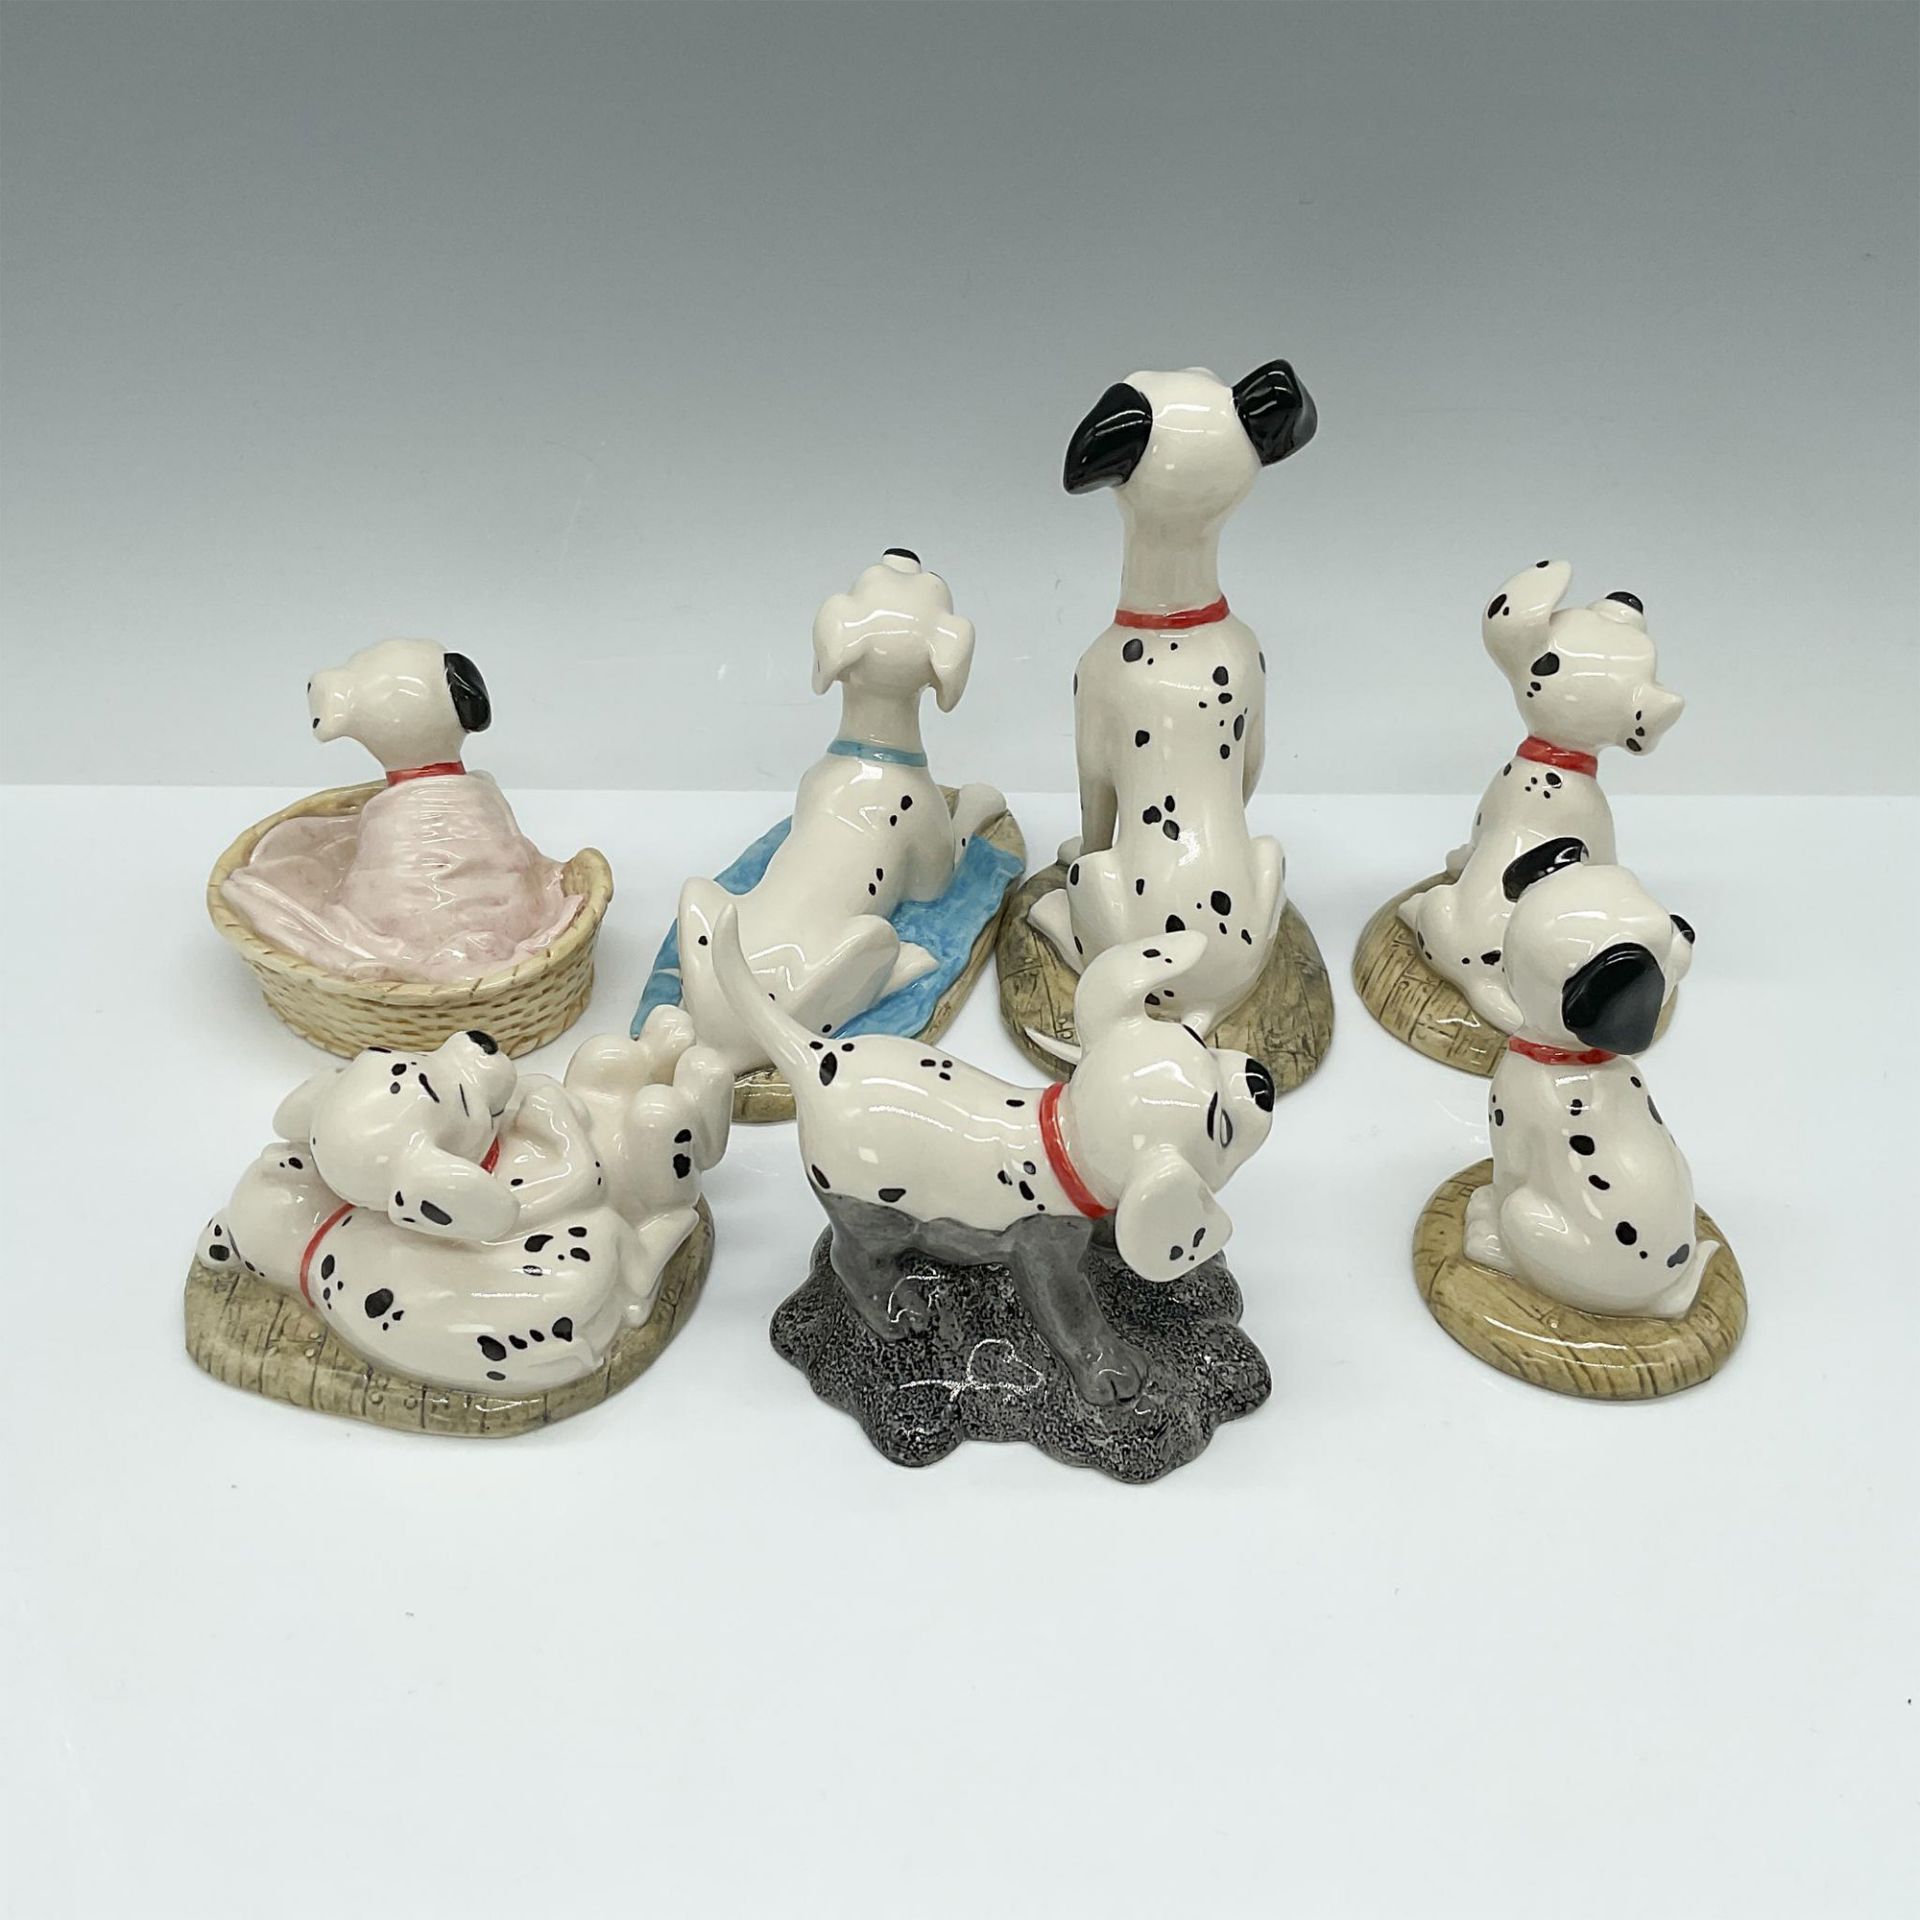 7pc Royal Doulton Disney Figurines, 101 Dalmatians Family - Image 2 of 3